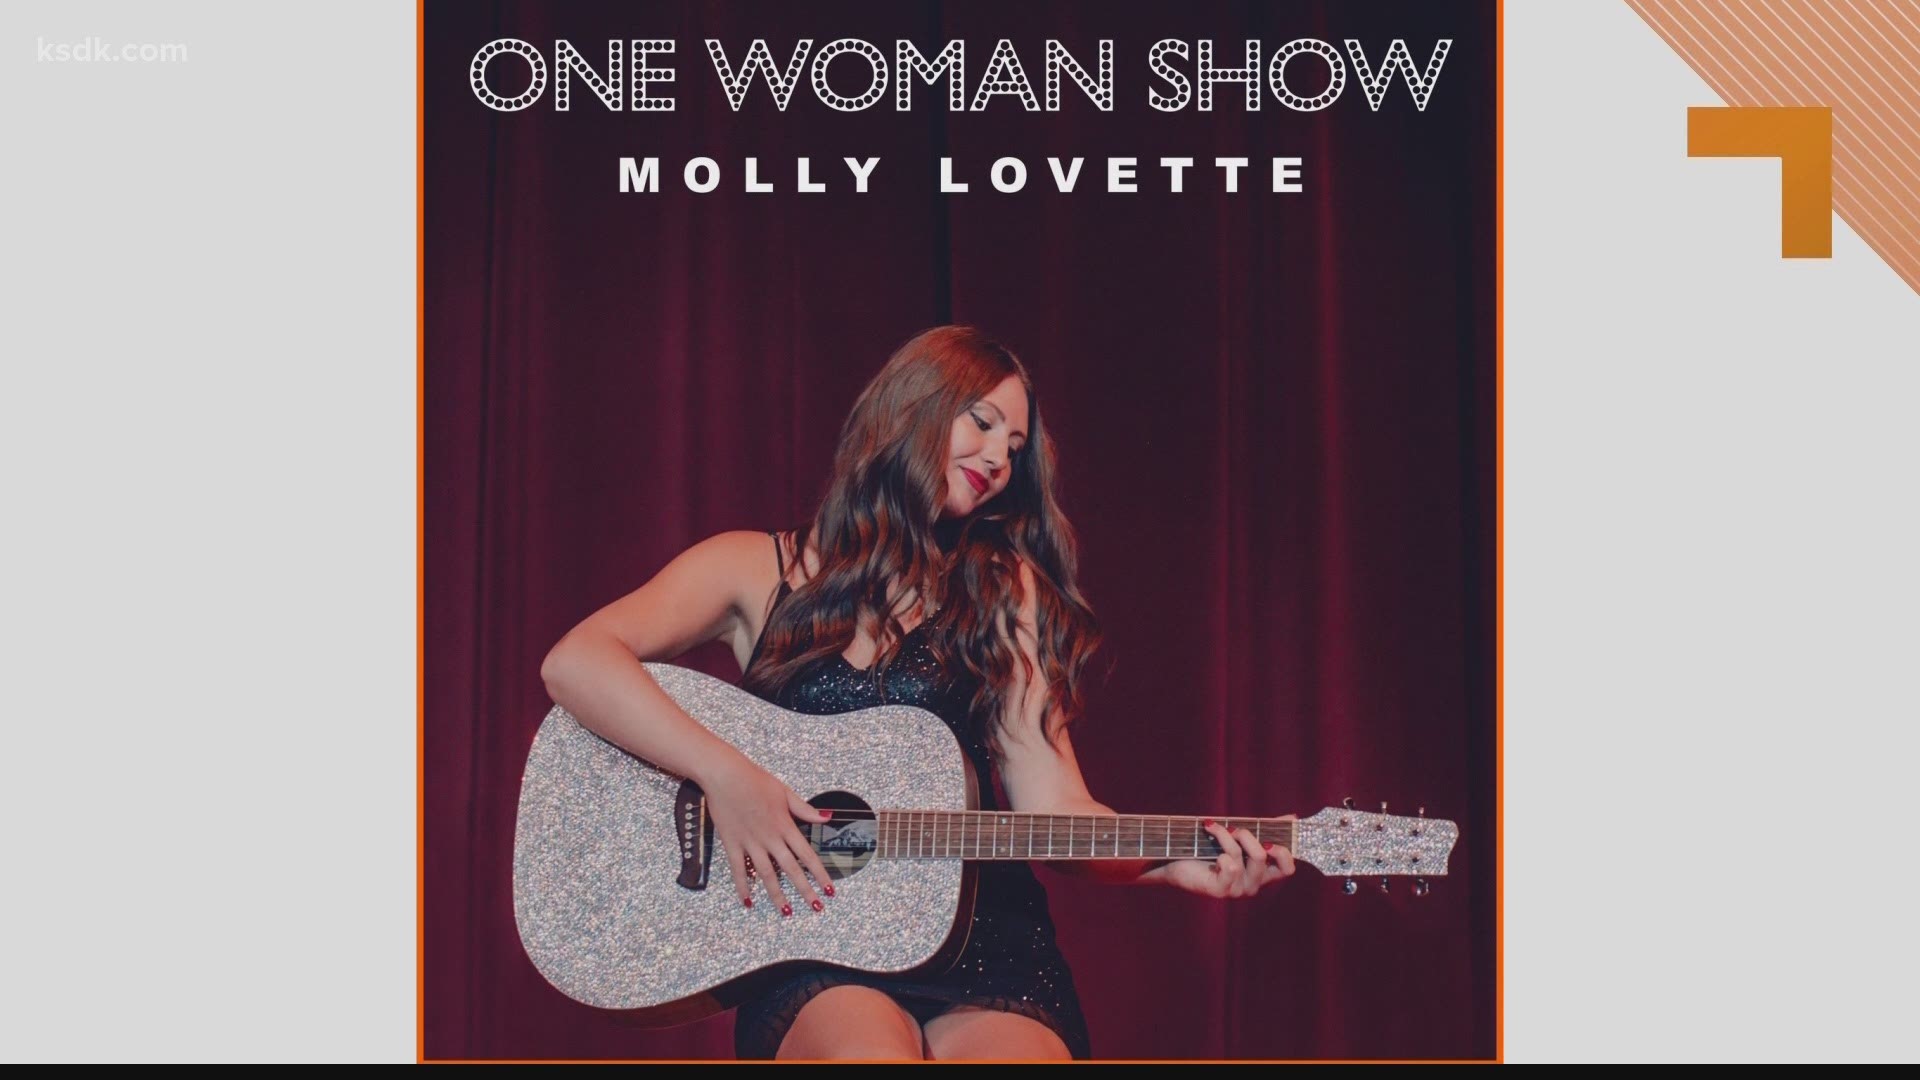 Molly Lovette is performing on November 28 at Bemo’s and November 29 at Chandler Hill Vineyards. Visit MollyLovette.com for more information.